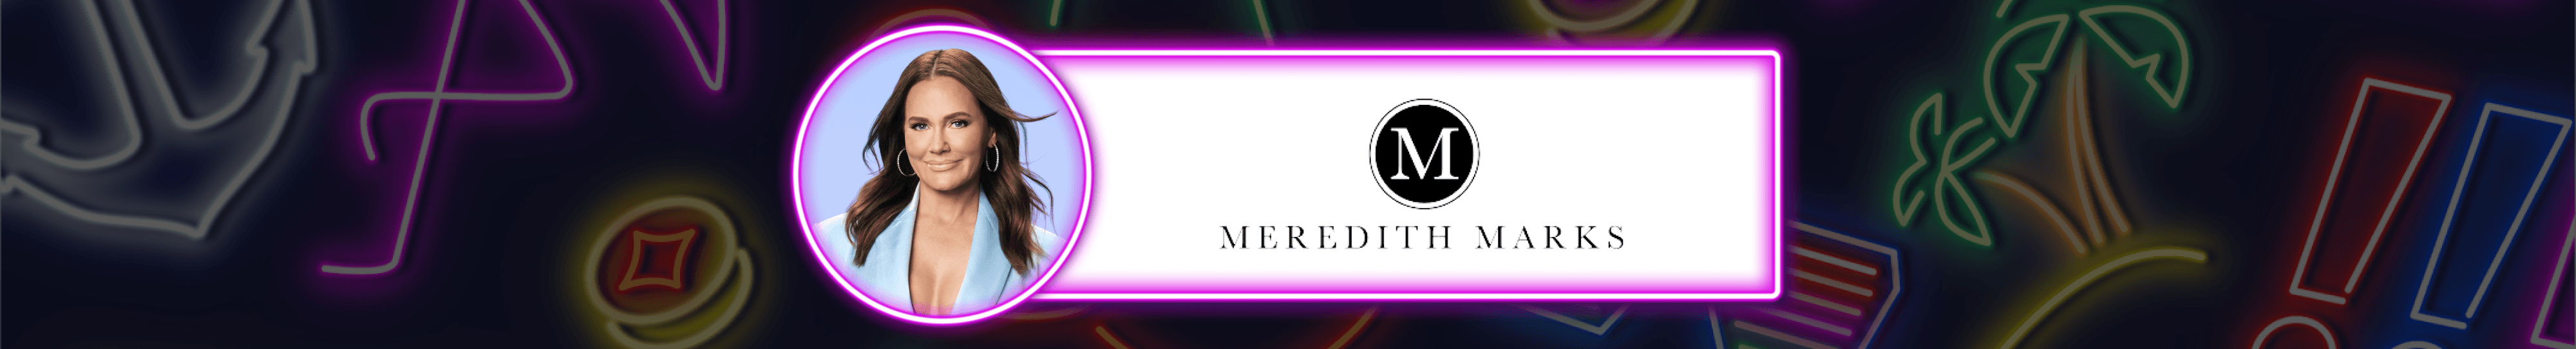 Meredith Desktop.png